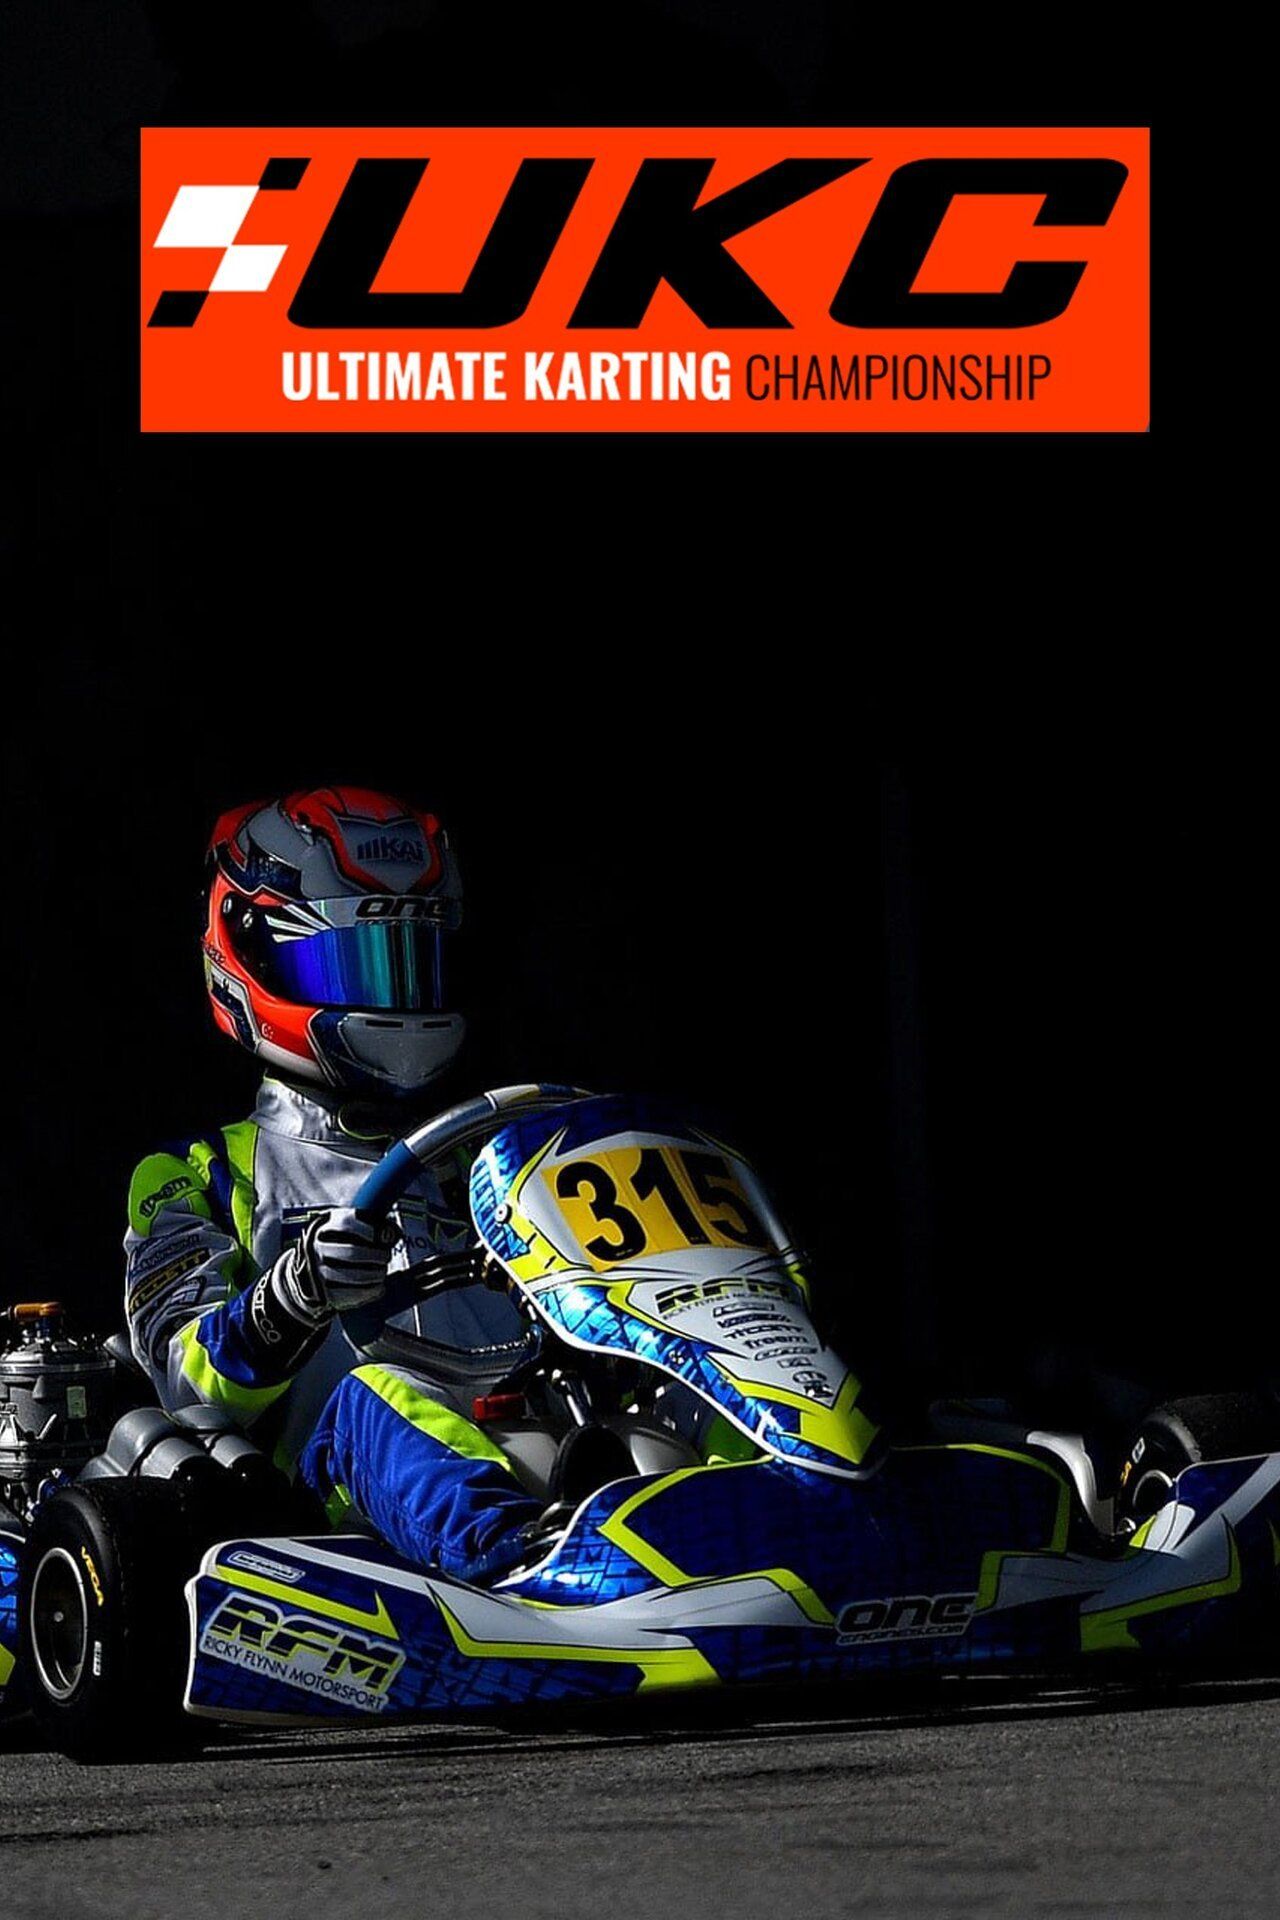 Ultimate Karting Championship